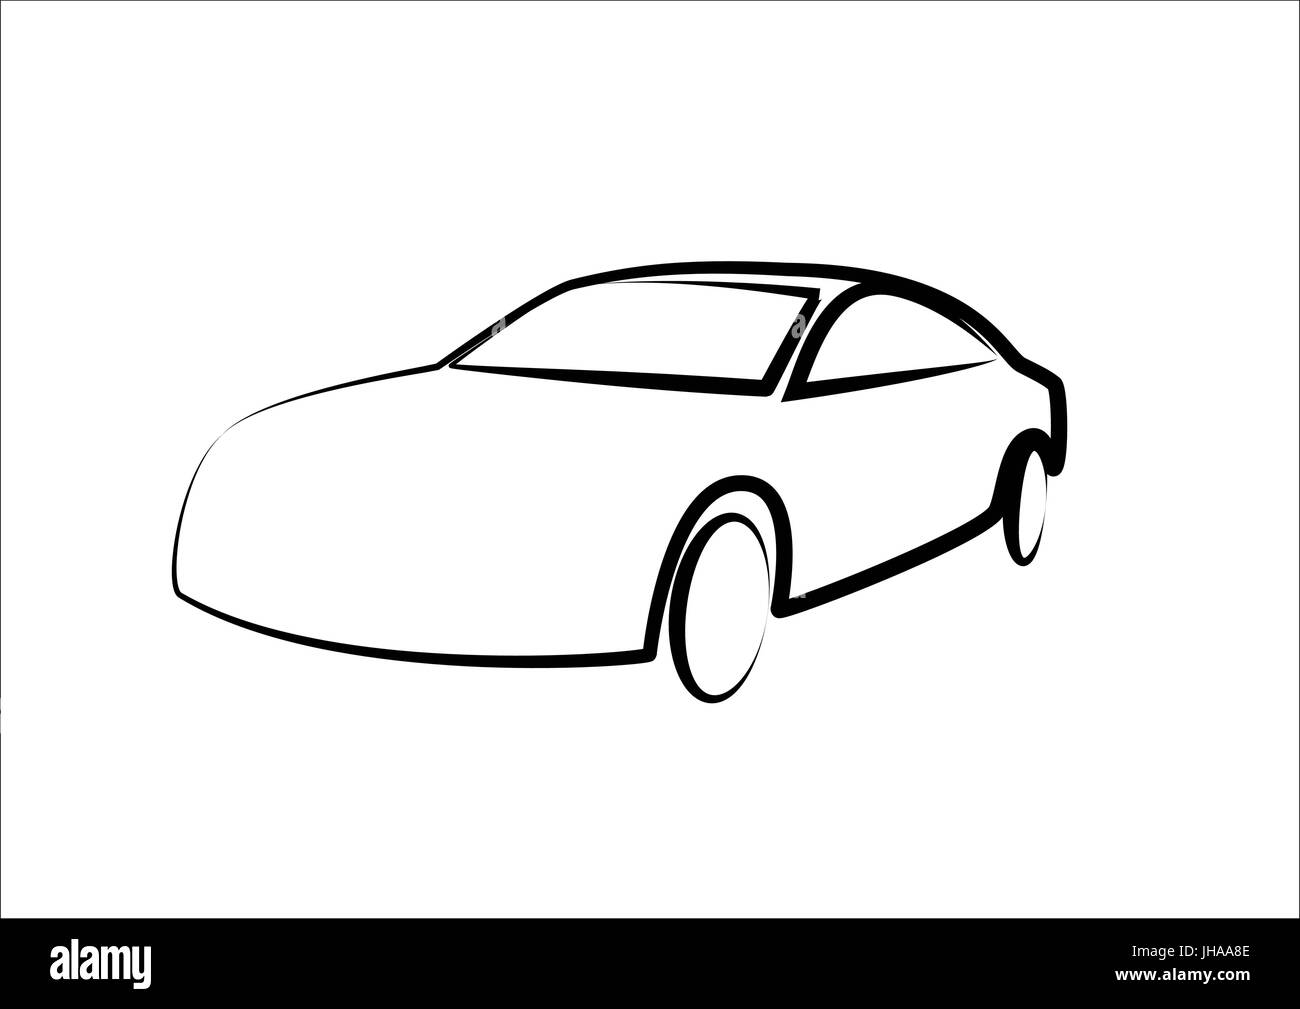 modern car silhouette - automobile illustration Stock Photo